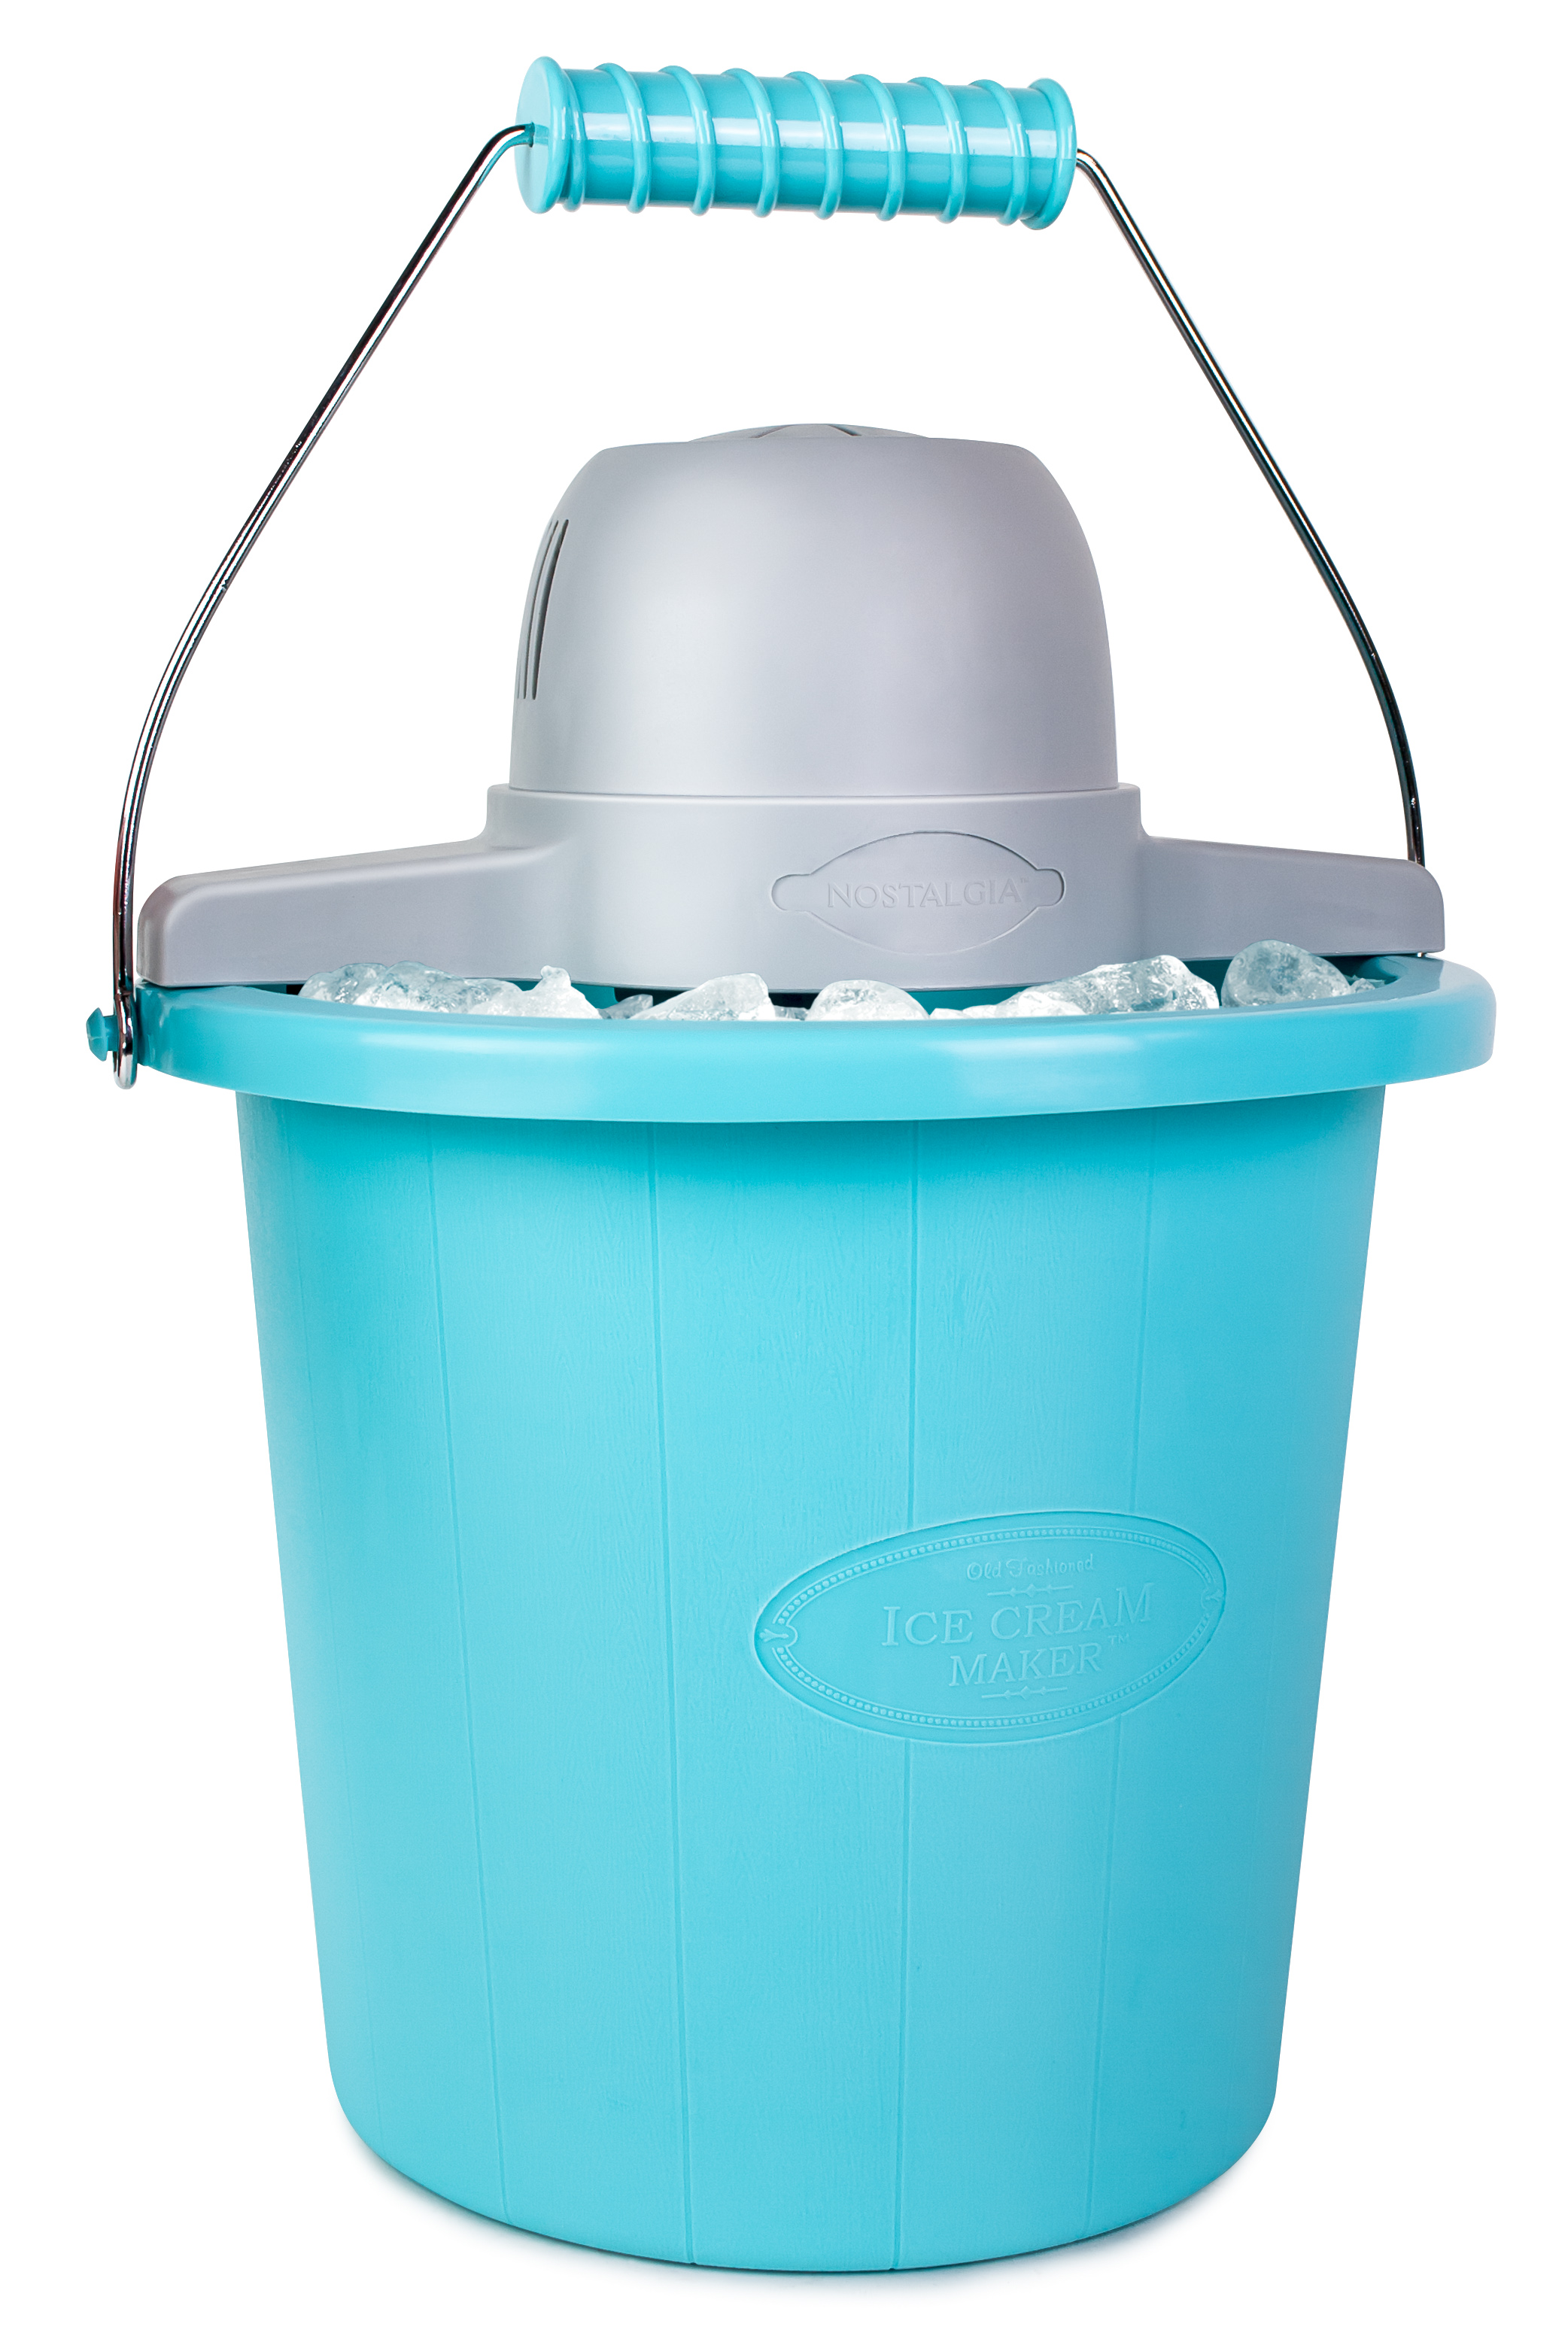 Nostalgia 4-Quart Bucket Electric Ice Cream Maker, Blue - image 1 of 4